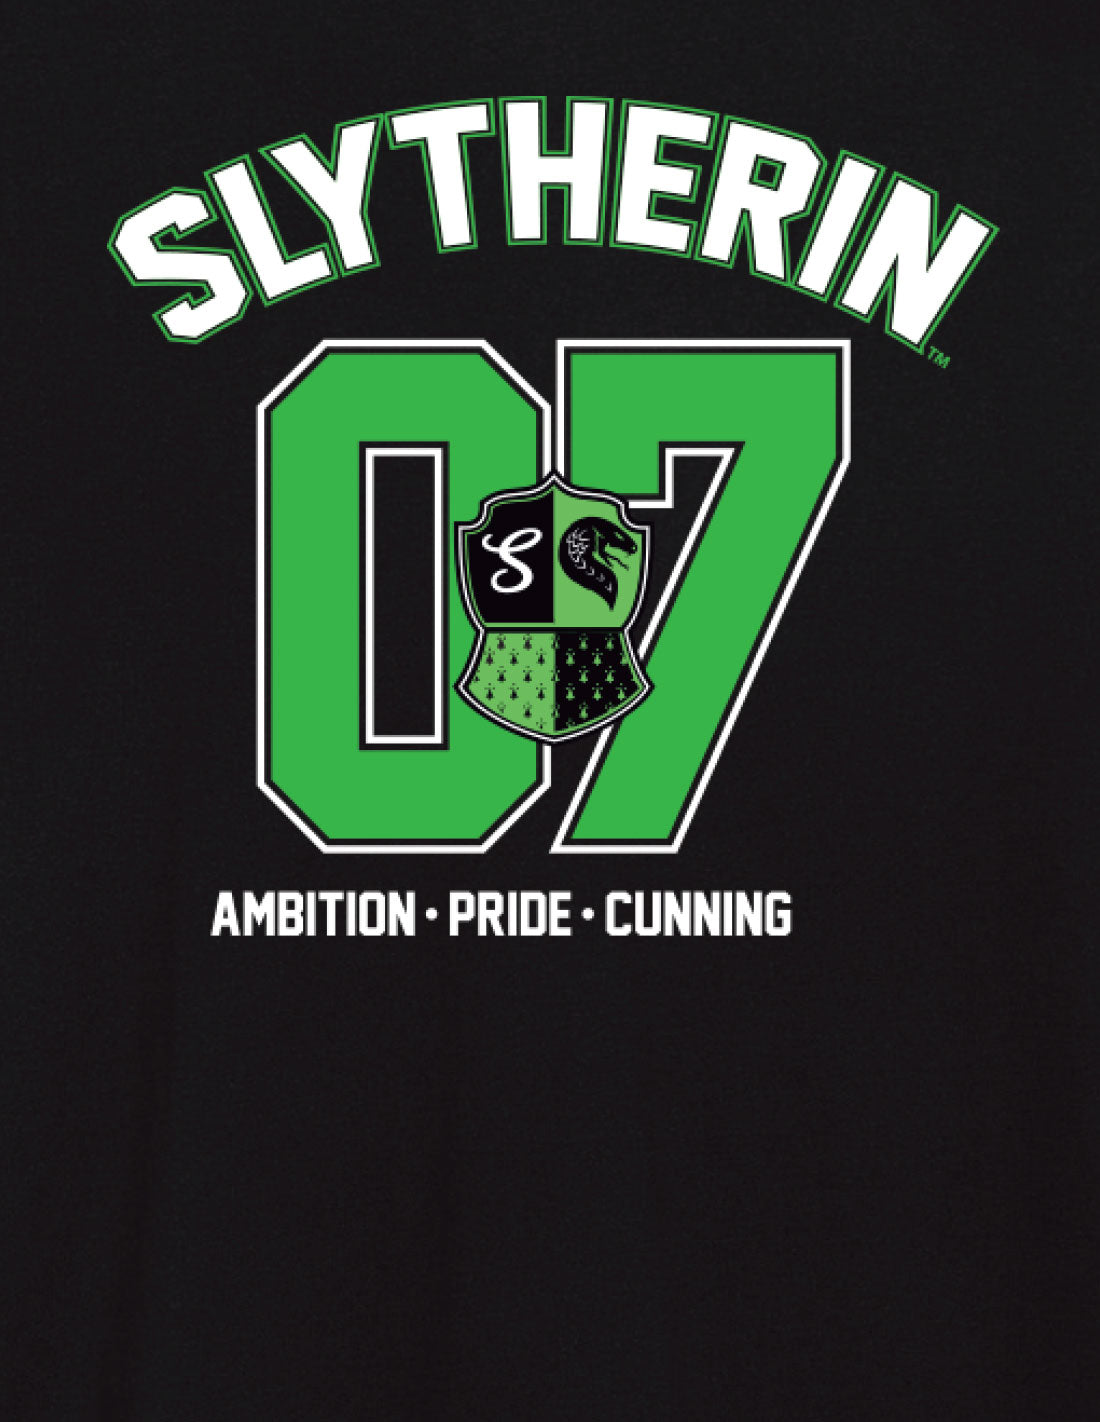 Harry Potter t-shirt - Slytherin Seeker